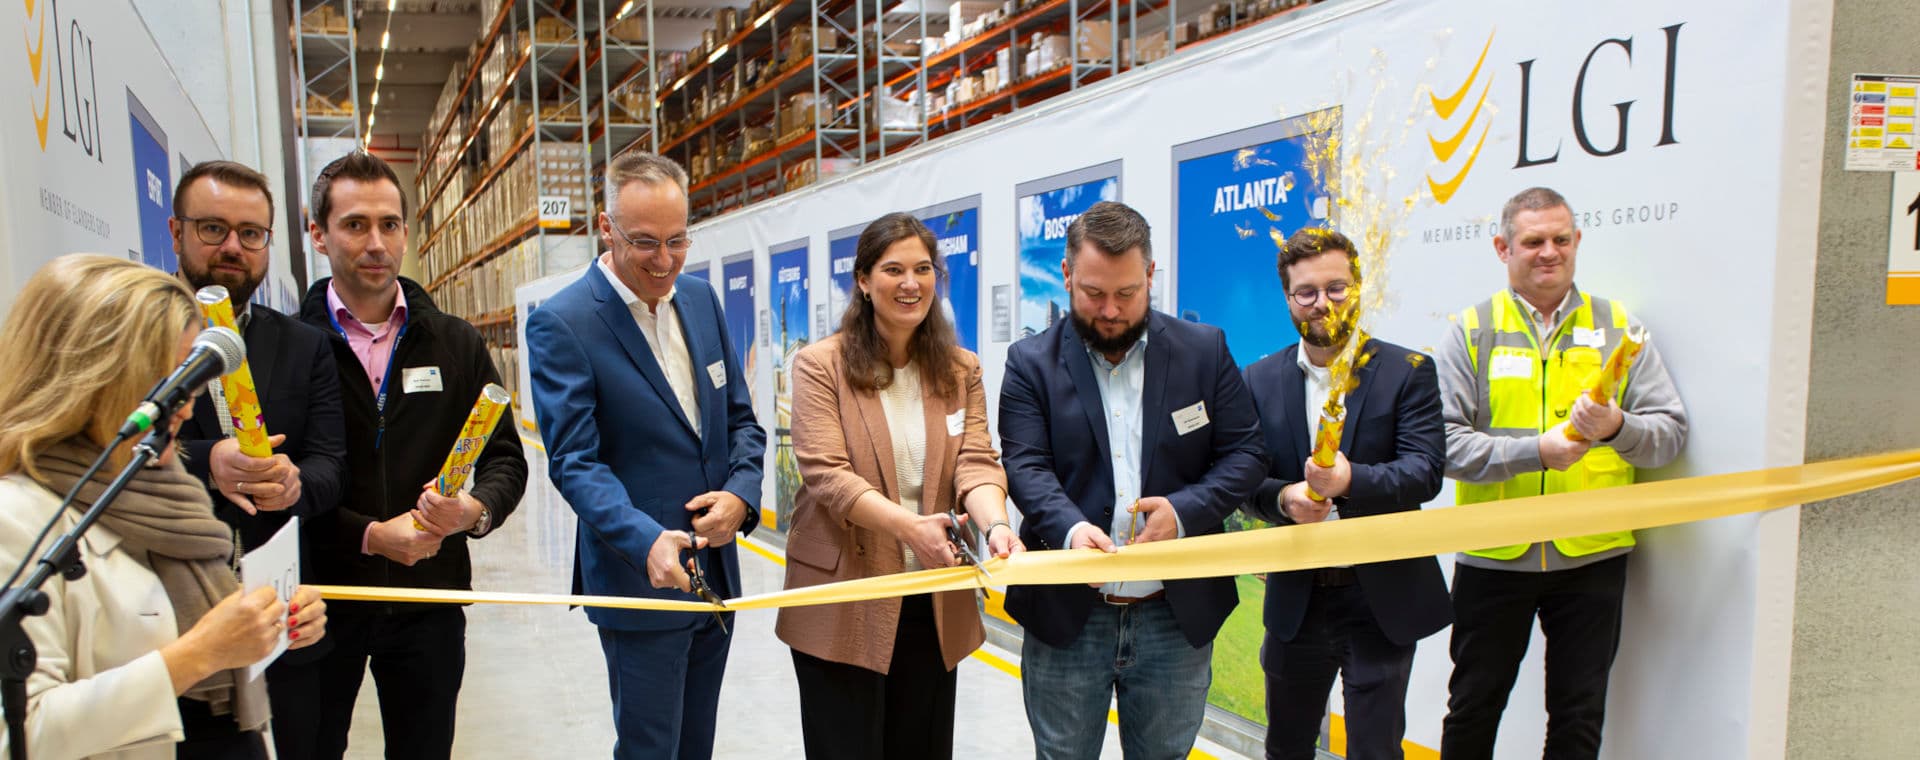 LGI opens new Erfurt location